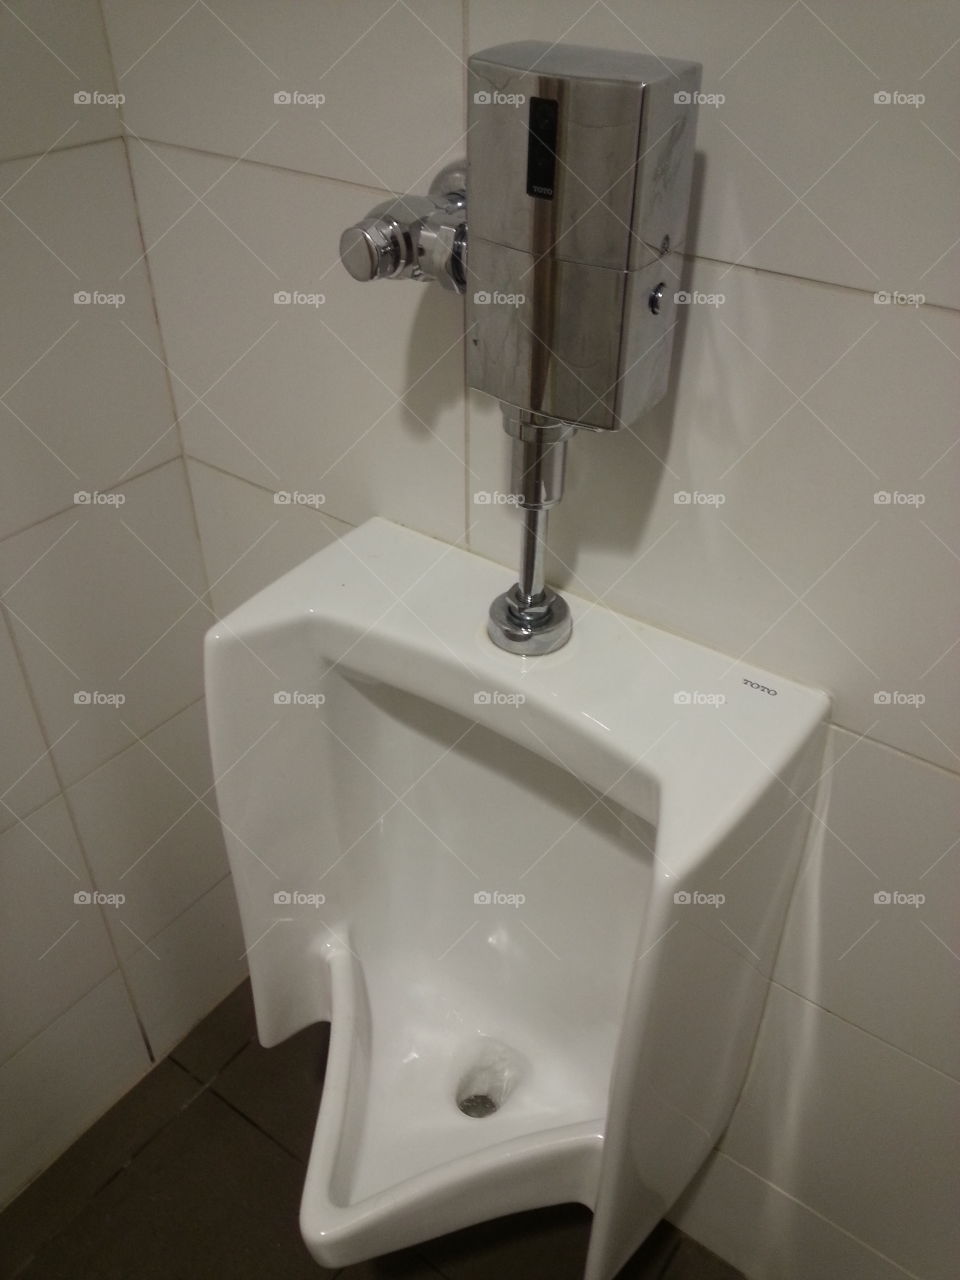 restrooms. urinal in a restroom